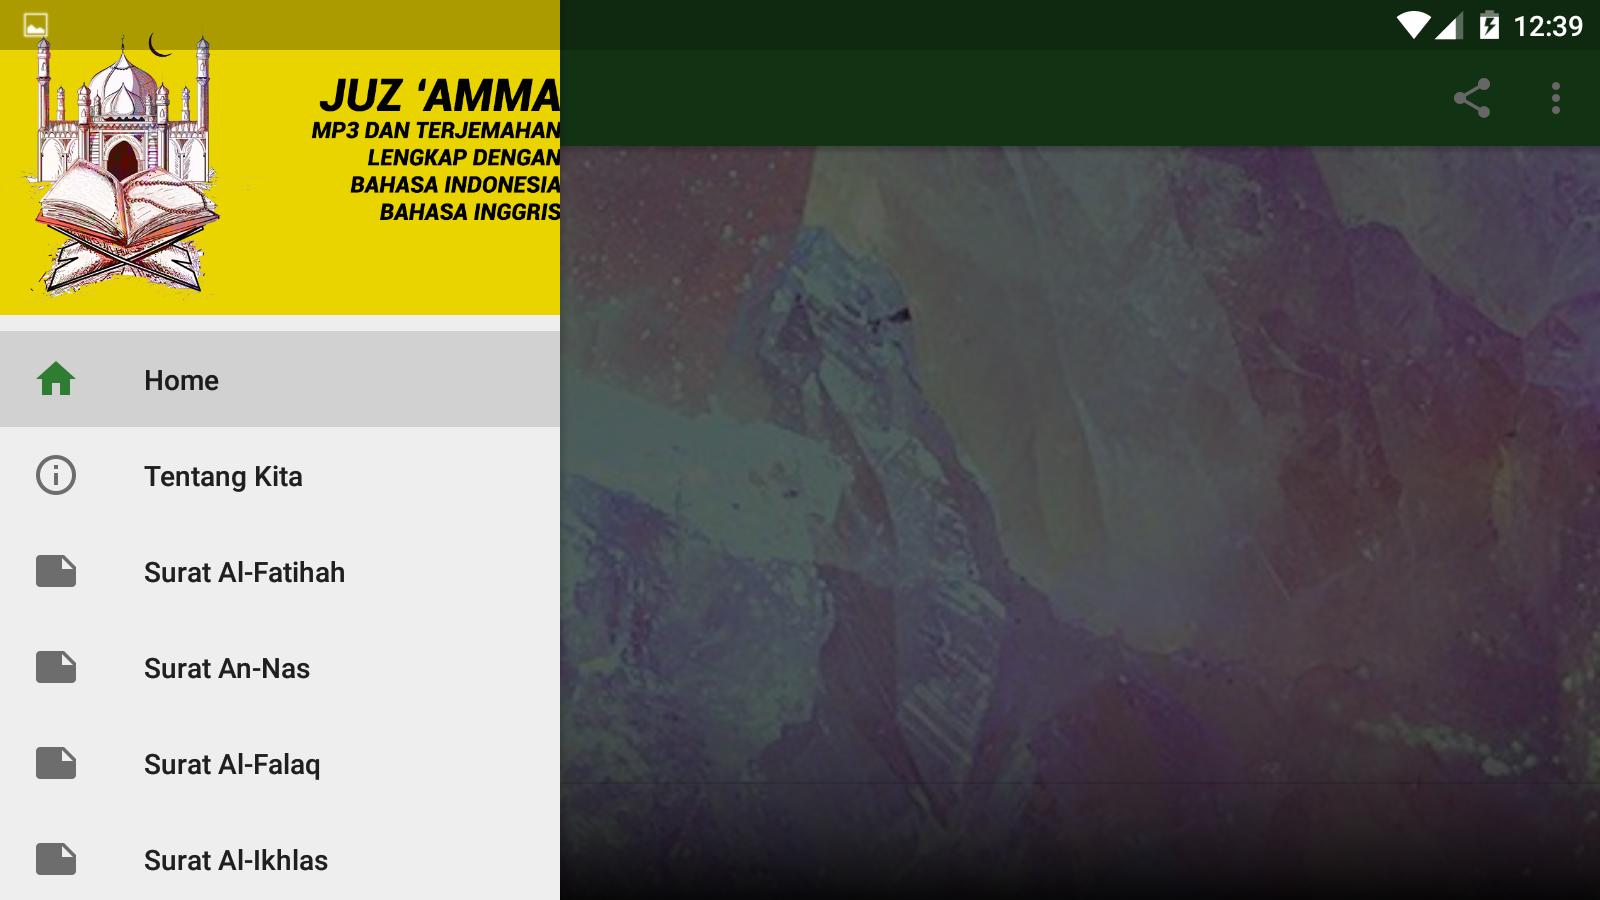 Juz Amma Mp3 Dan Terjemahan For Android Apk Download